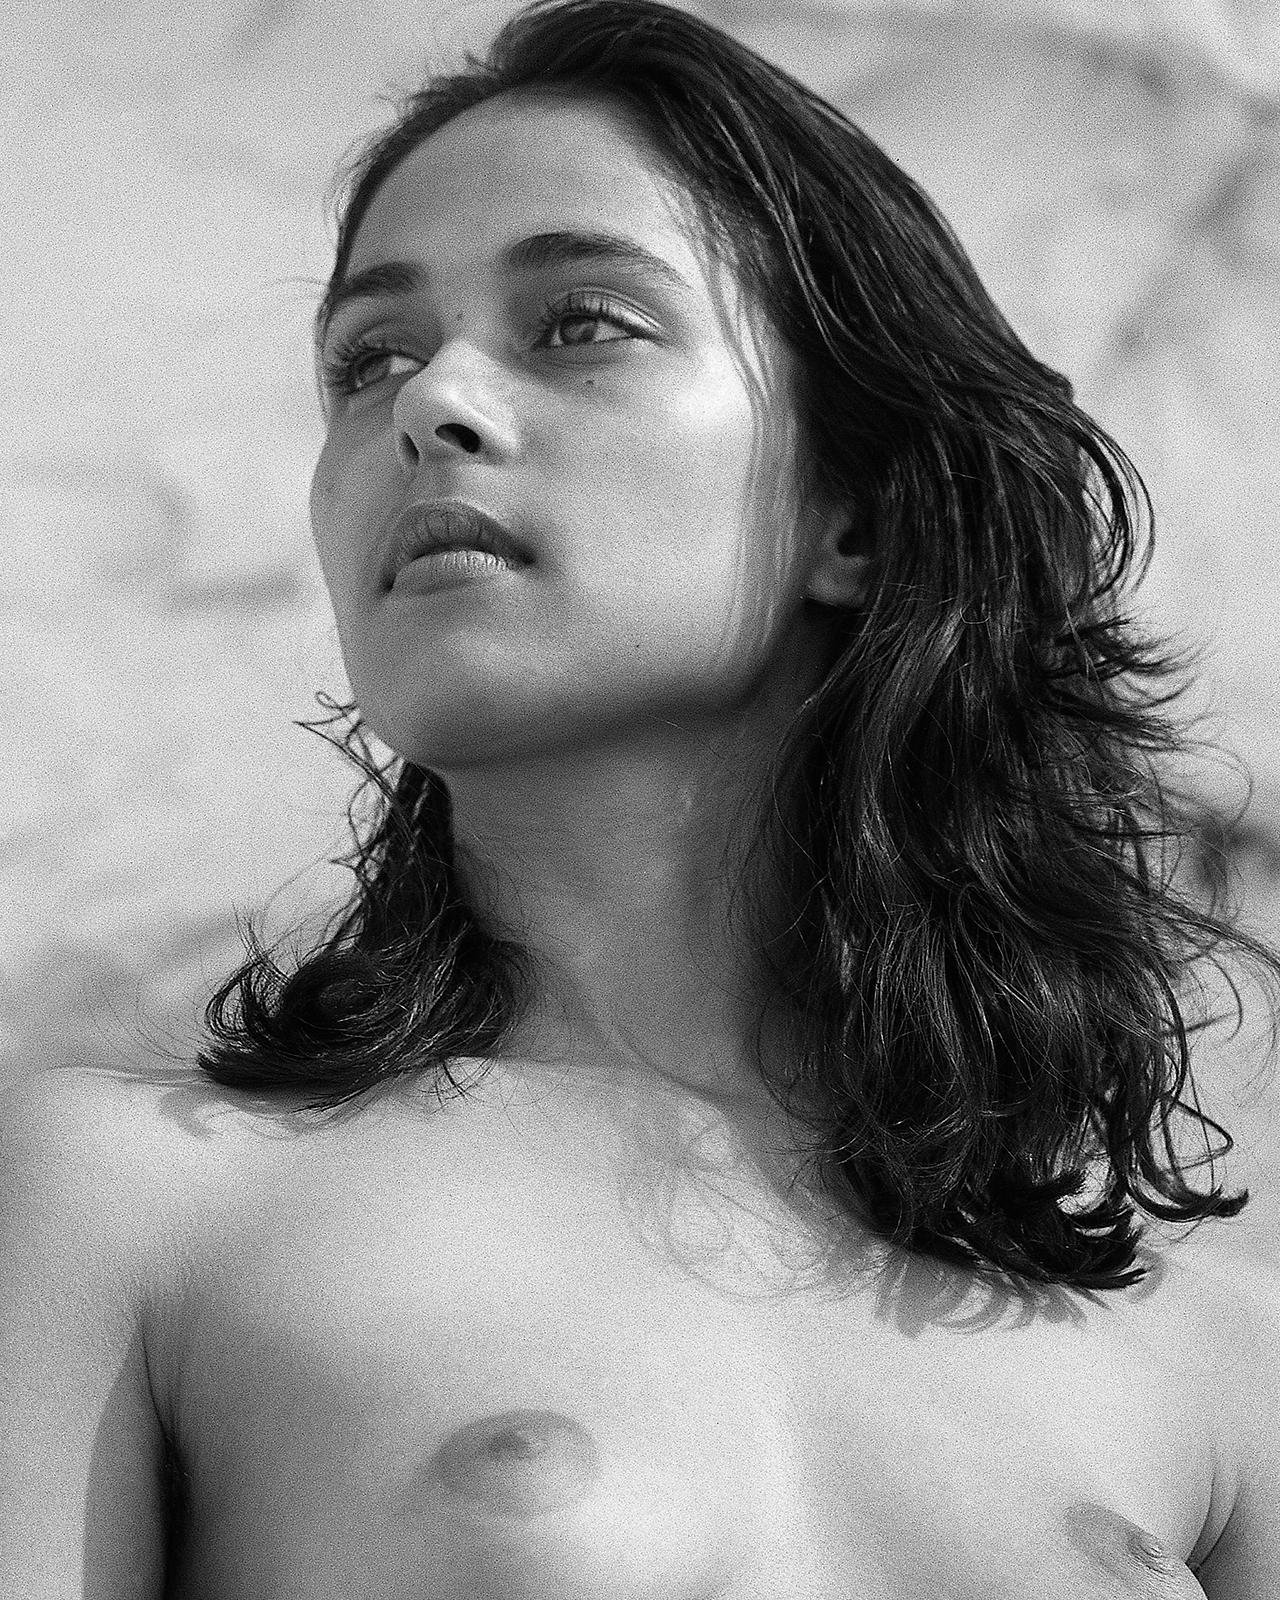 Zarina - Signed limited edition nude art print, Black white photo, Sensual Model - Contemporary Photograph by Ian Sanderson